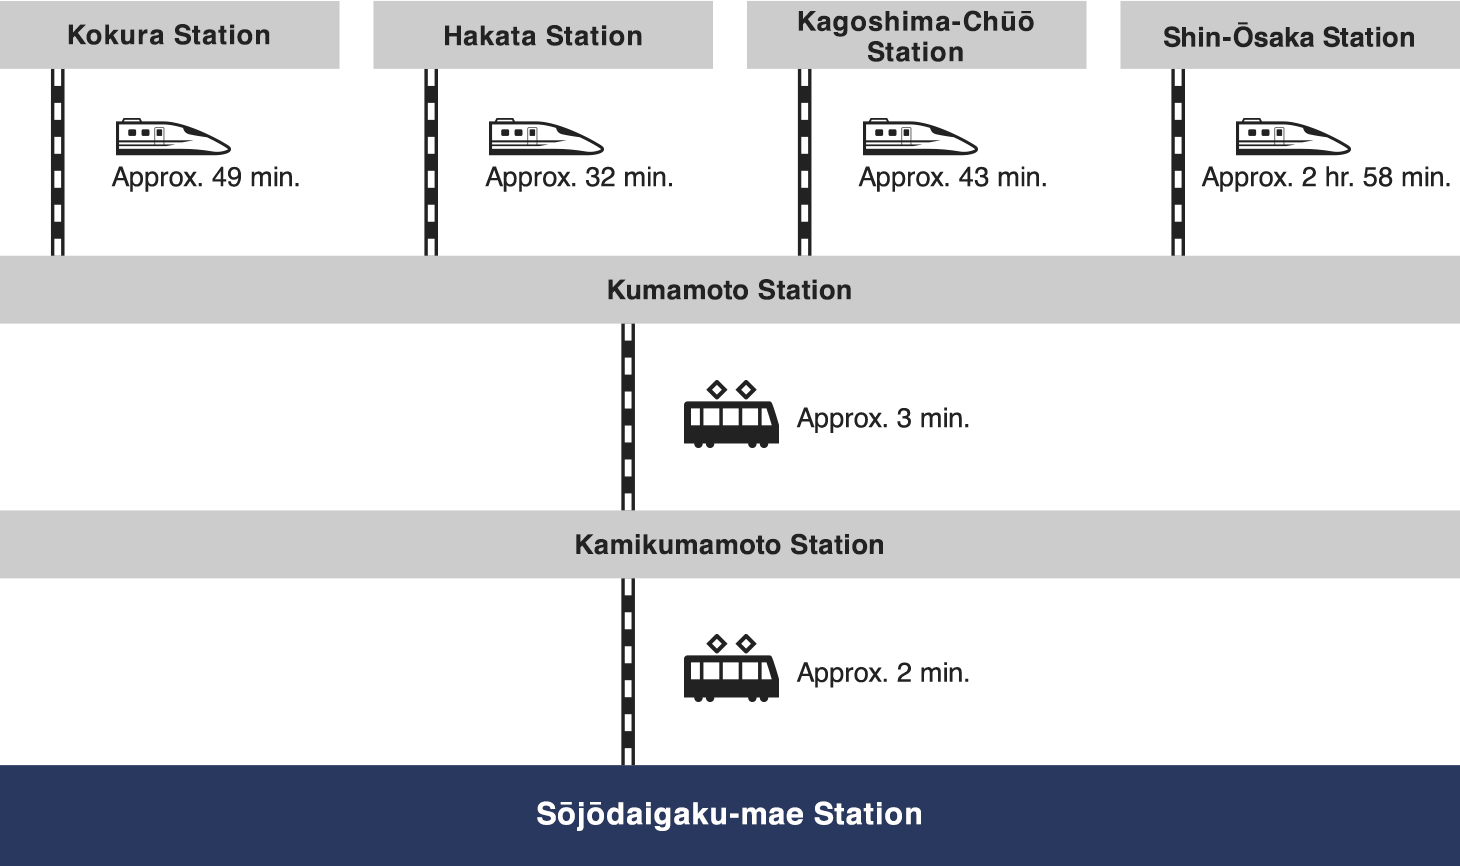 Access by Kyushu Shinkansen/JR Kagoshima Main Line